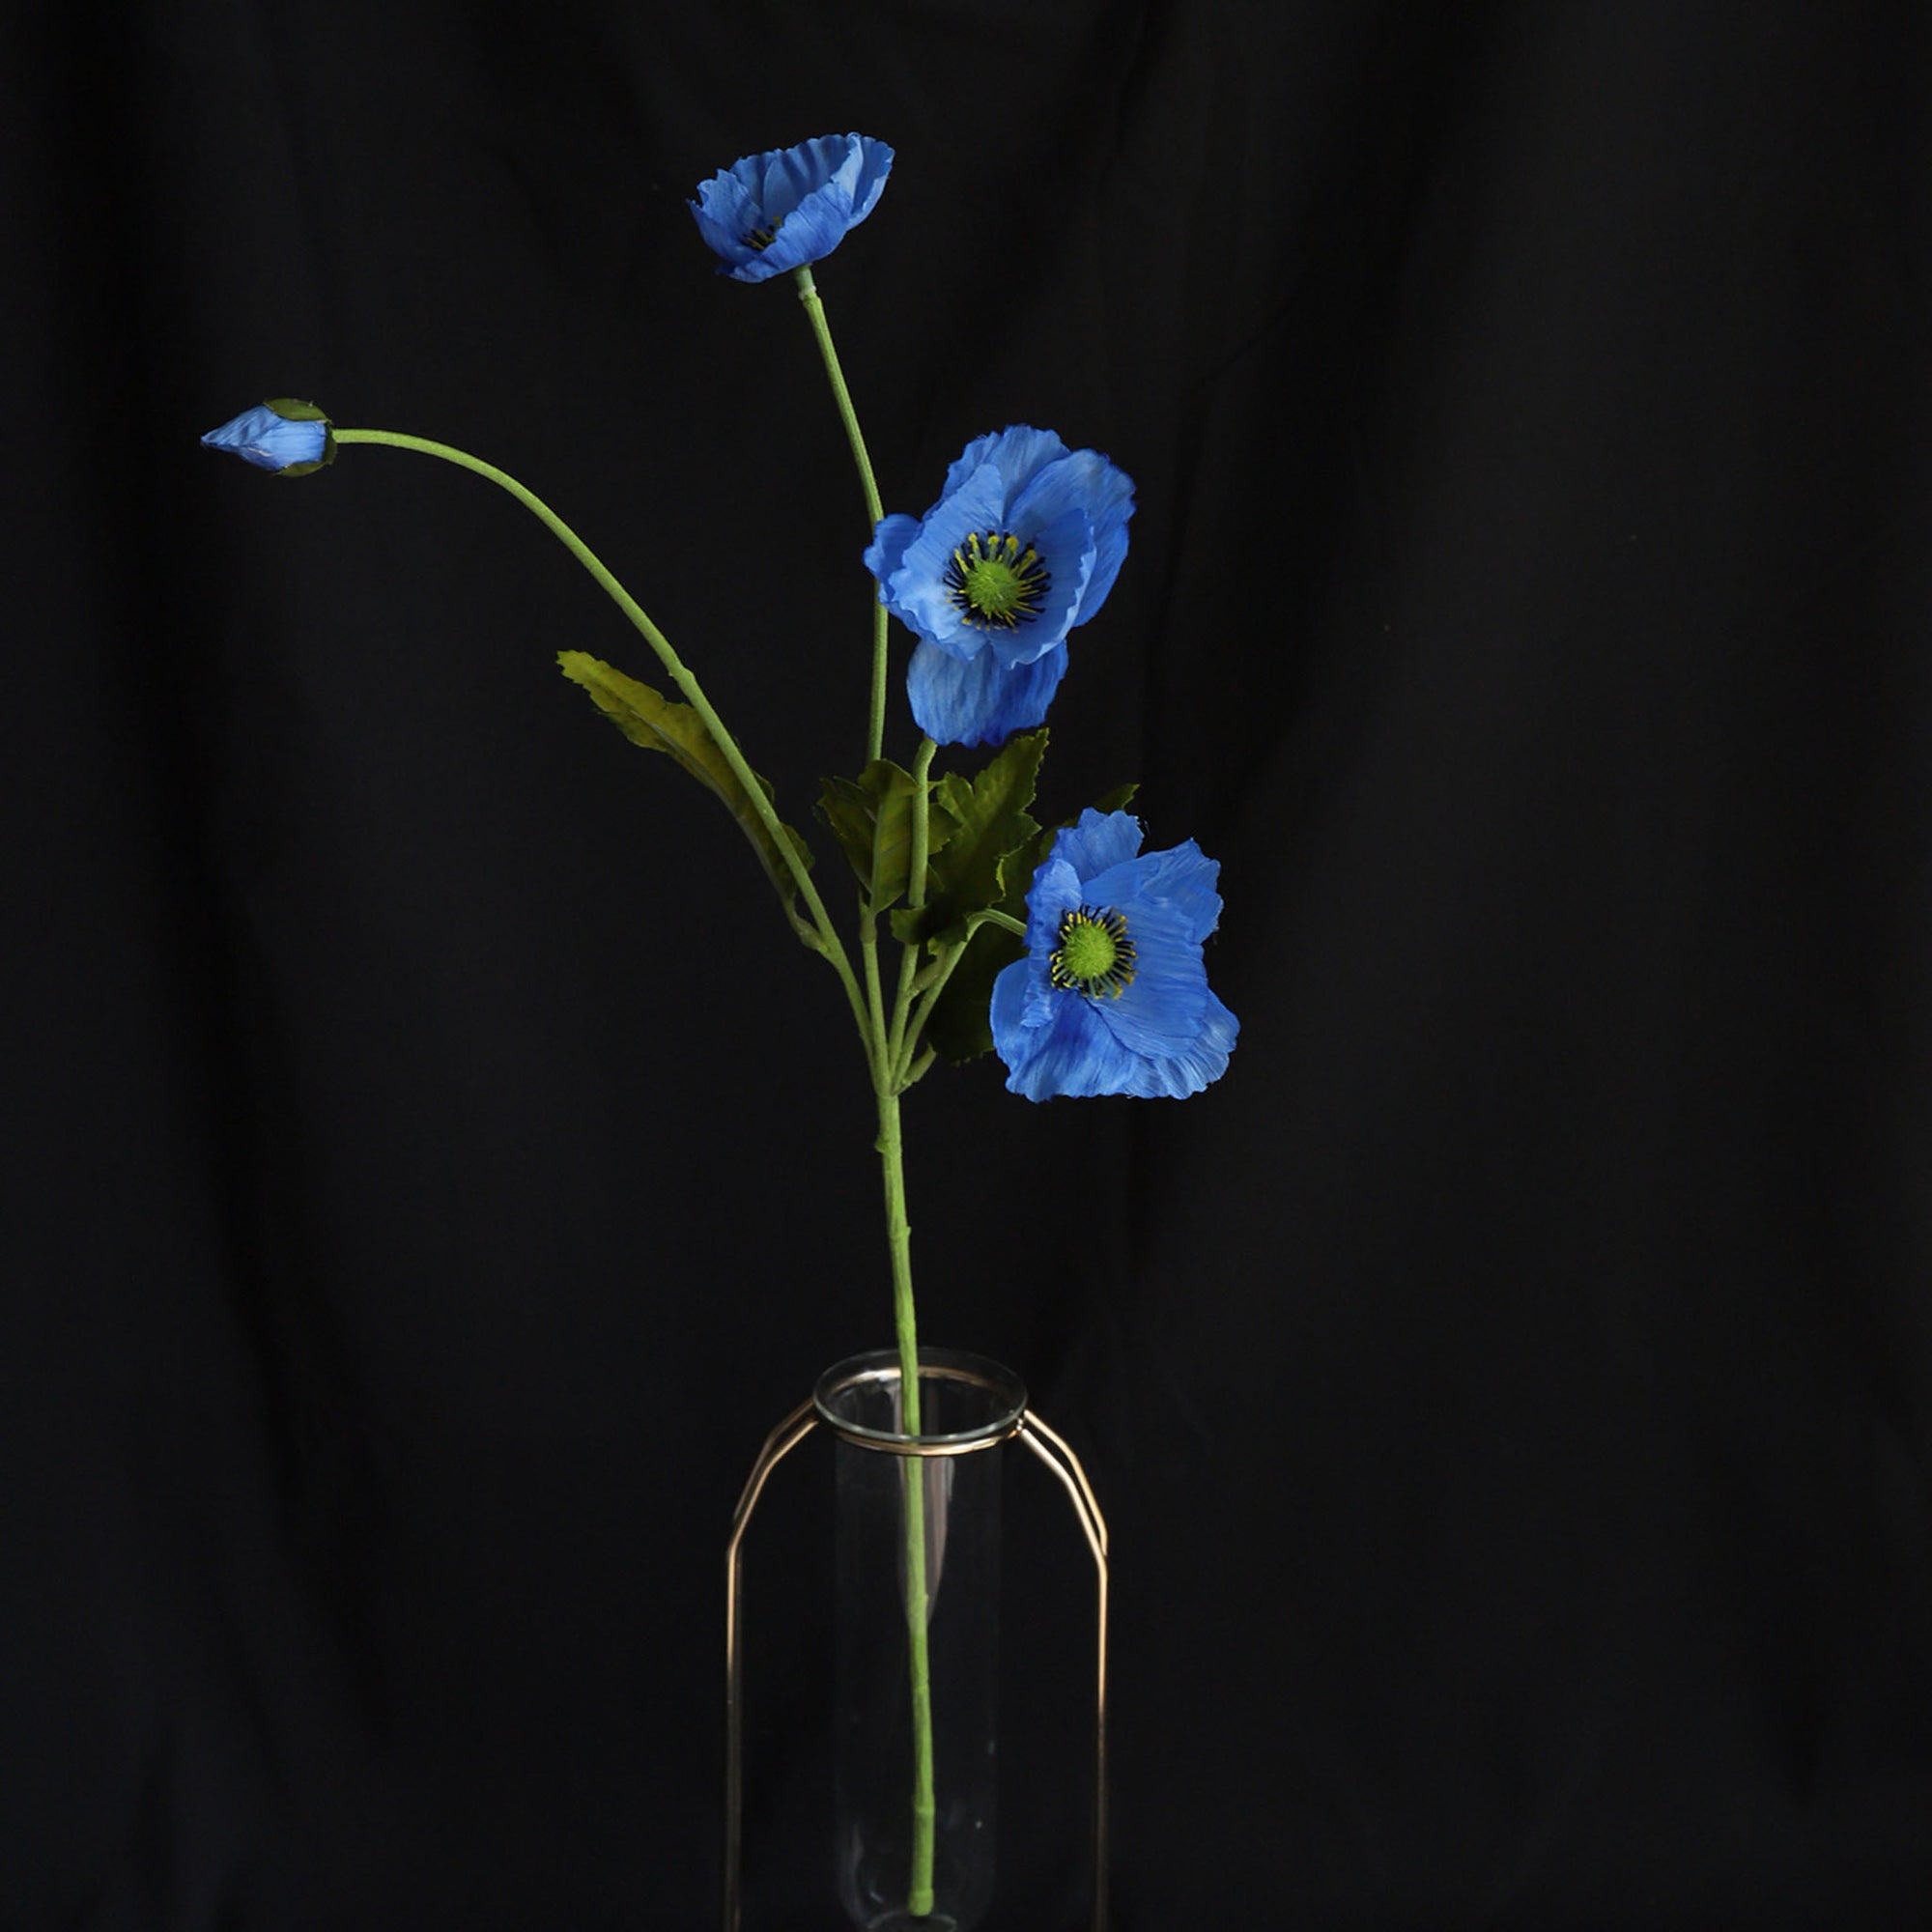 Artificial Poppies Silk Poppy Flowers